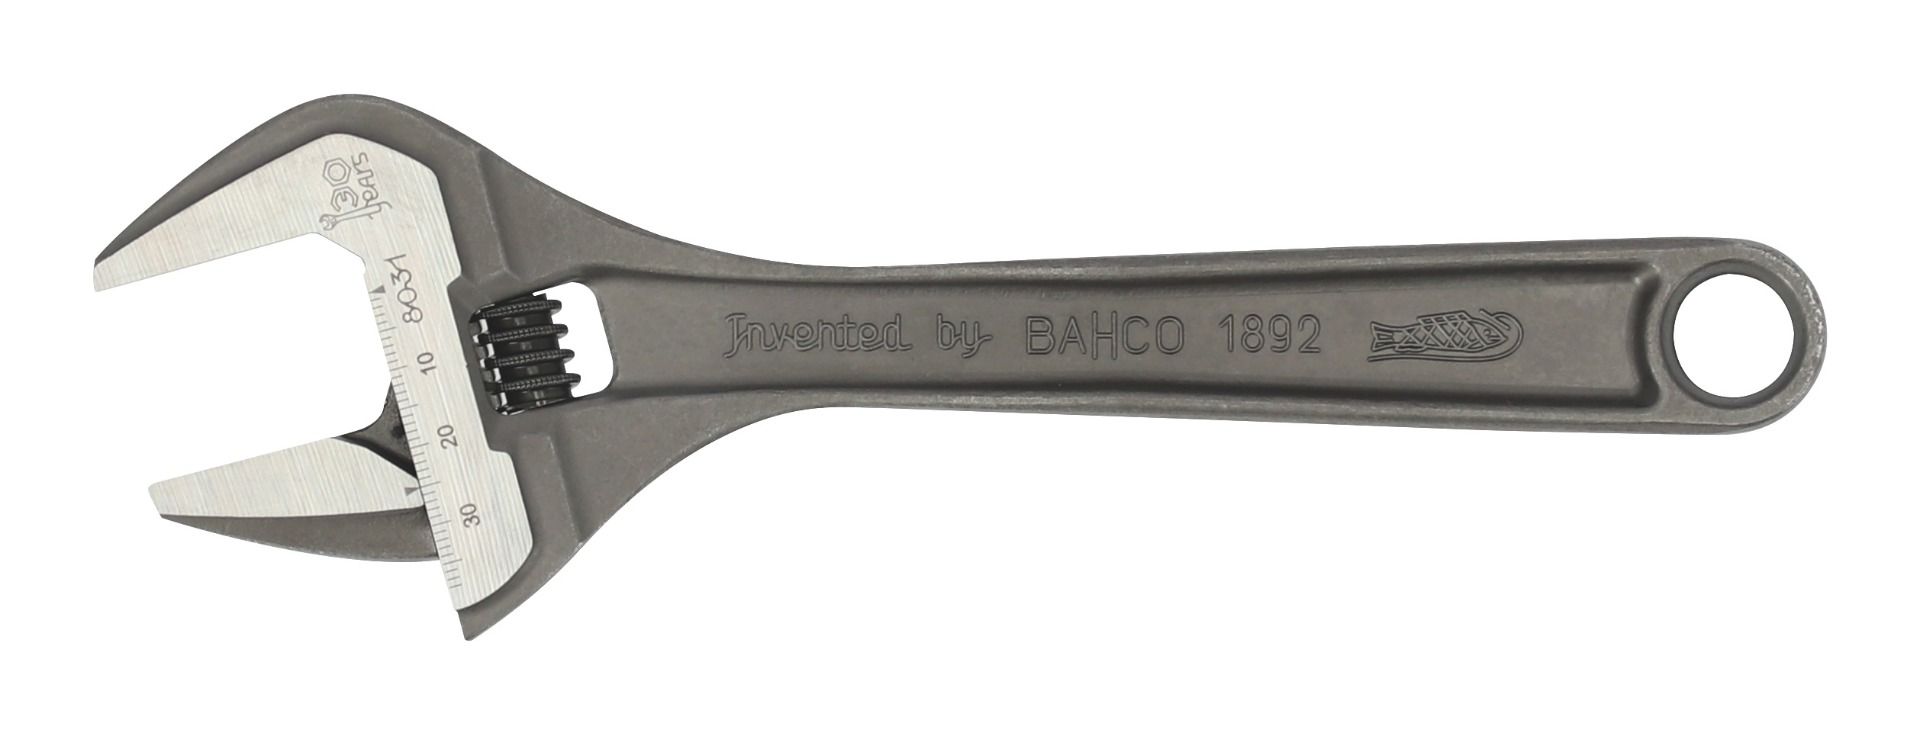 Bahco Skiftnyckel 8031 jubileumsnyckel 130 år